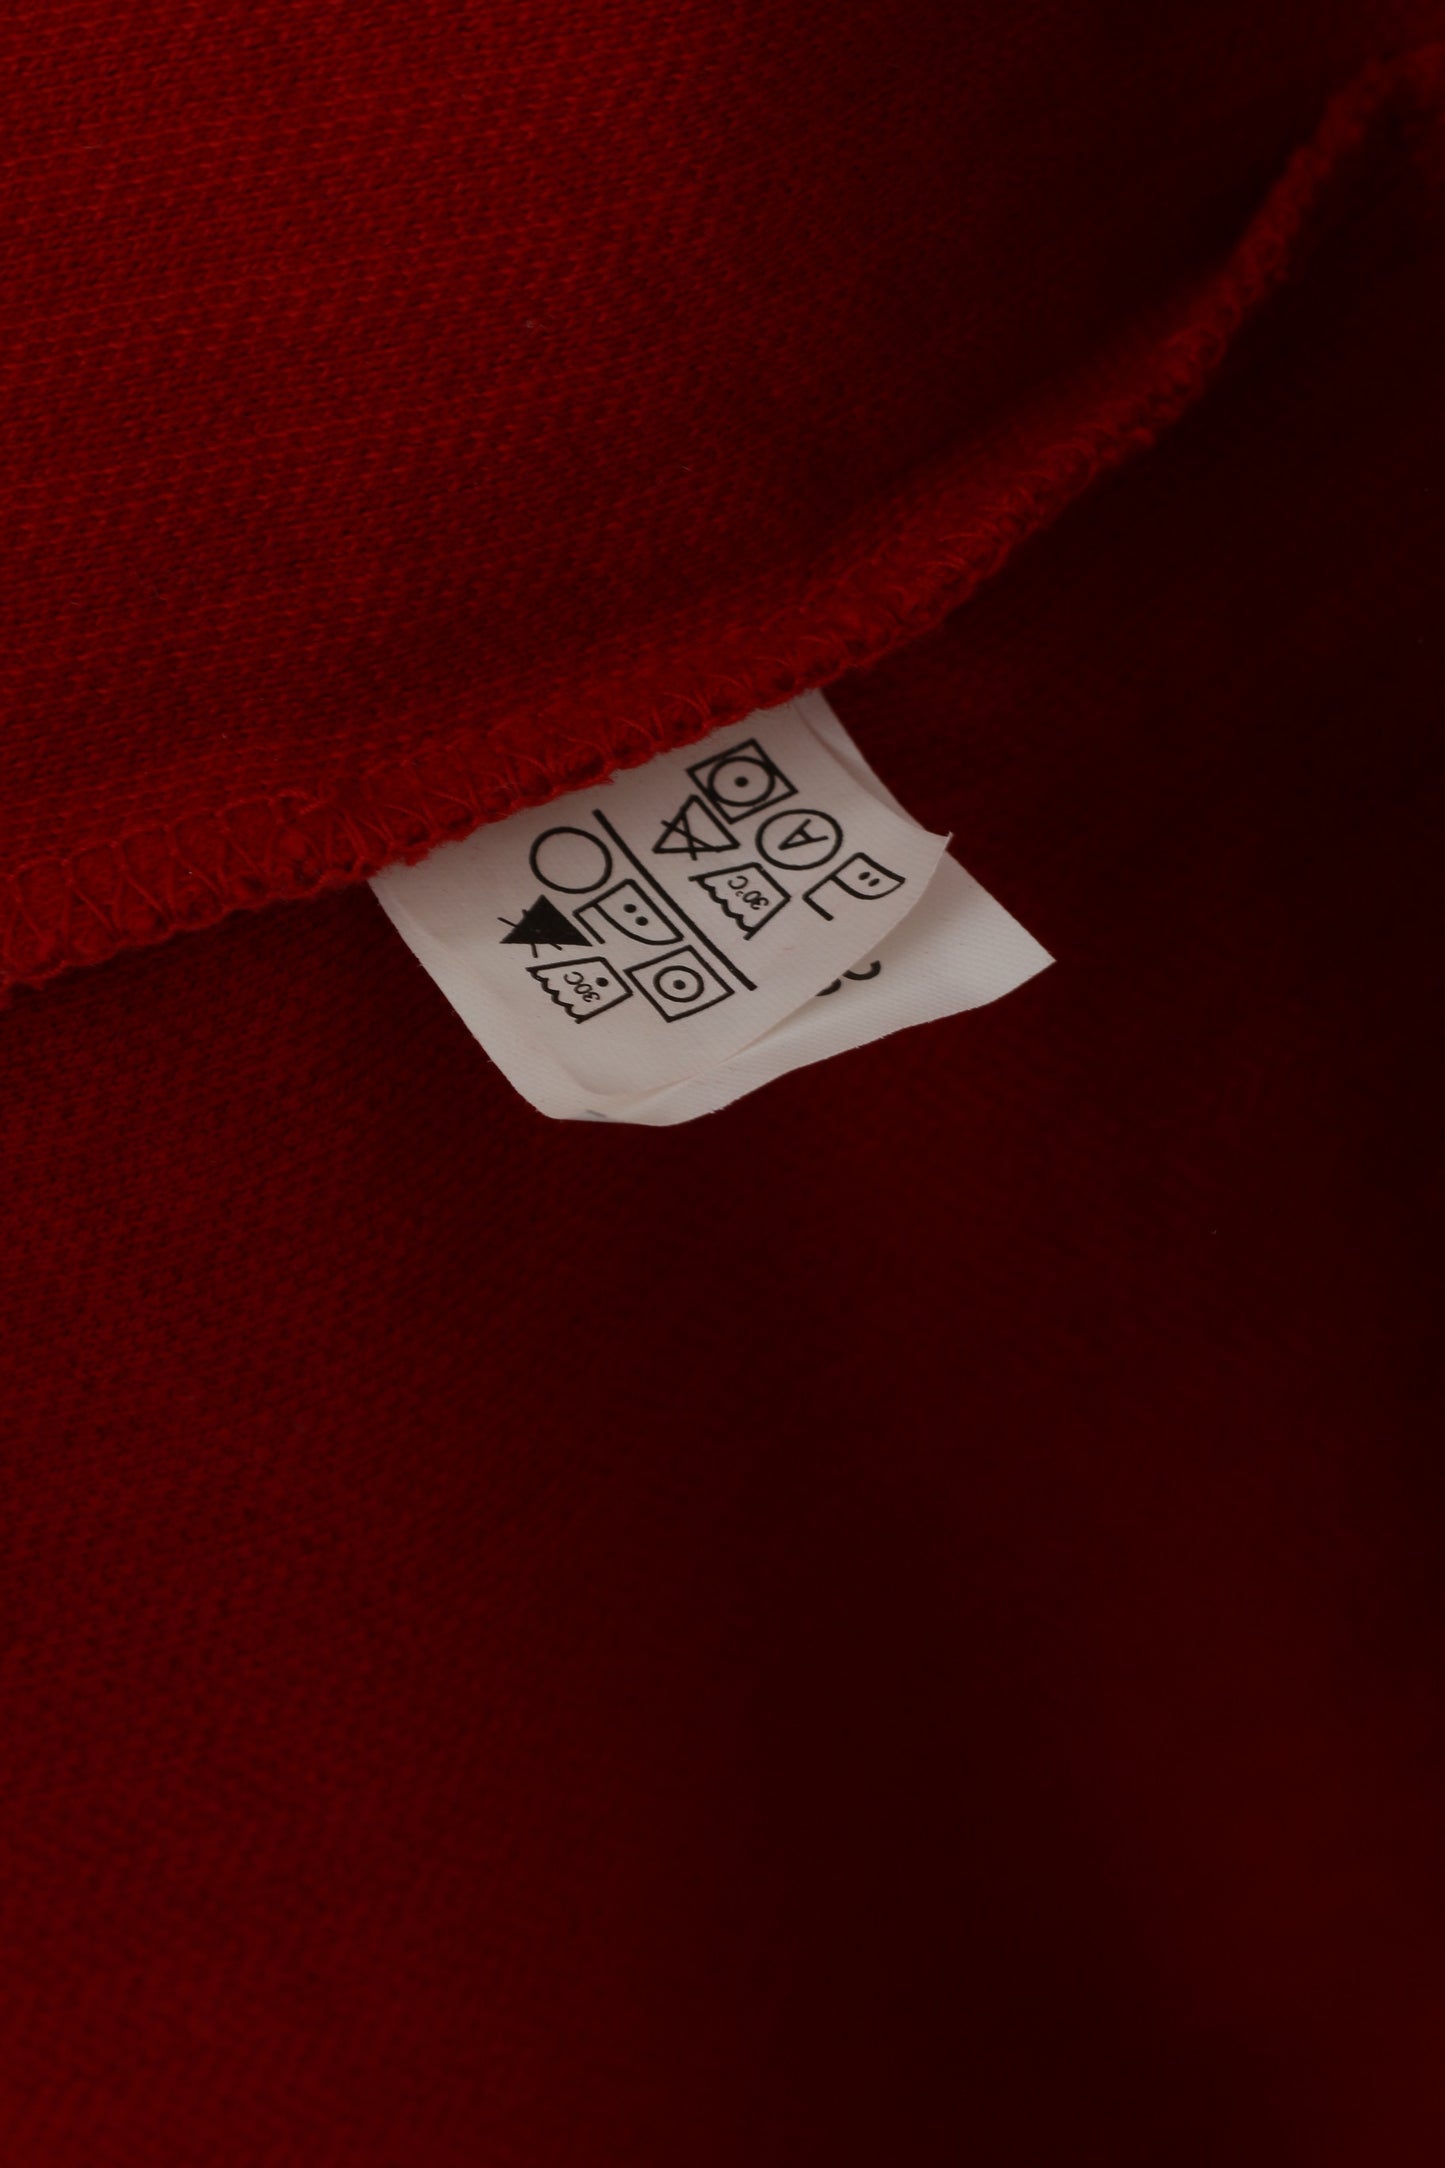 Chaps Men XL Polo Shirt Red Long Sleeve Cotton Sport Logo Detailed Buttons Top